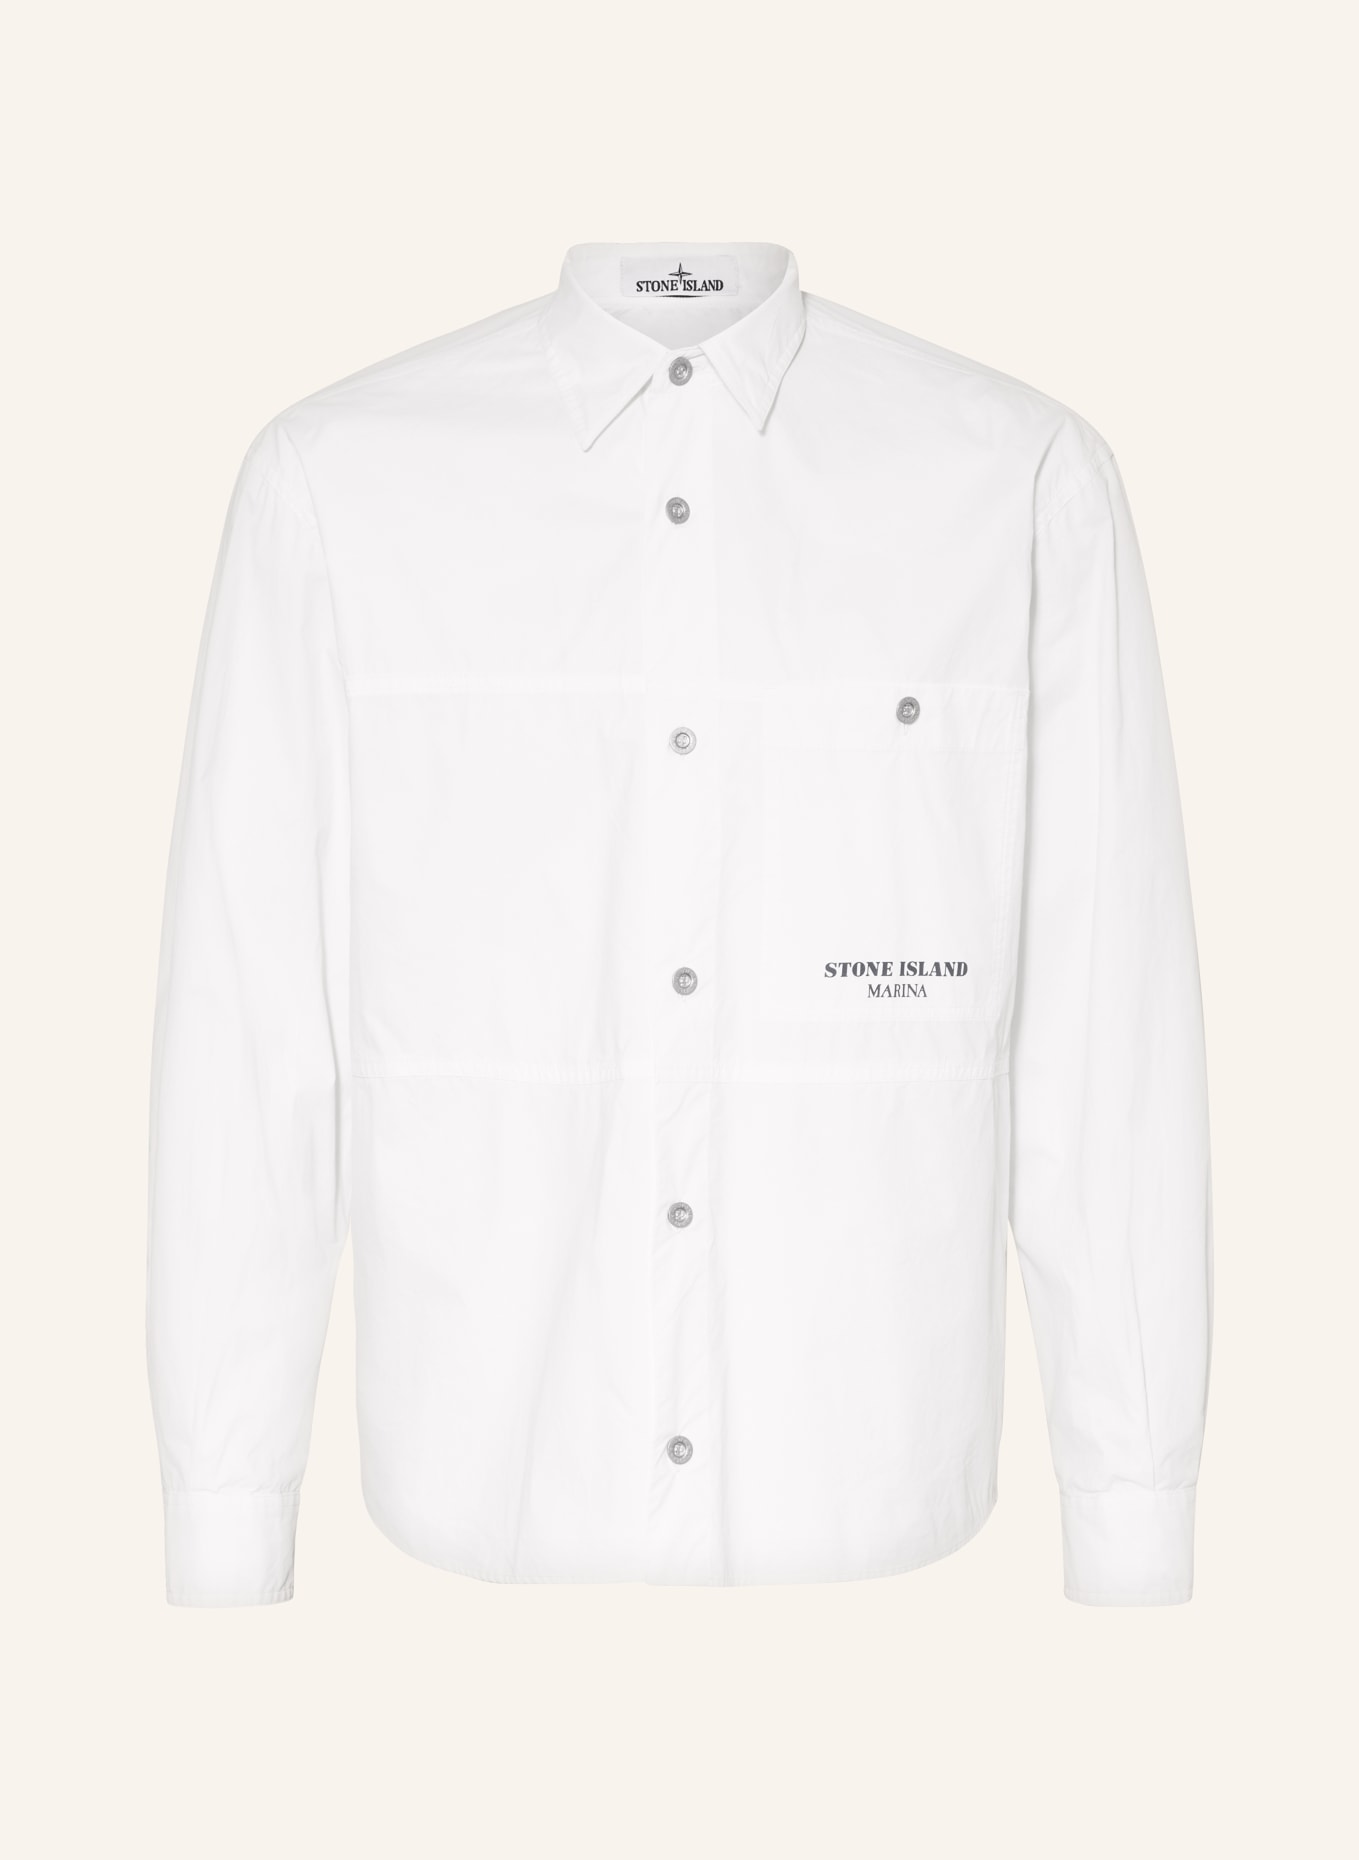 STONE ISLAND Shirt MARINA comfort fit, Color: WHITE/ DARK BLUE (Image 1)